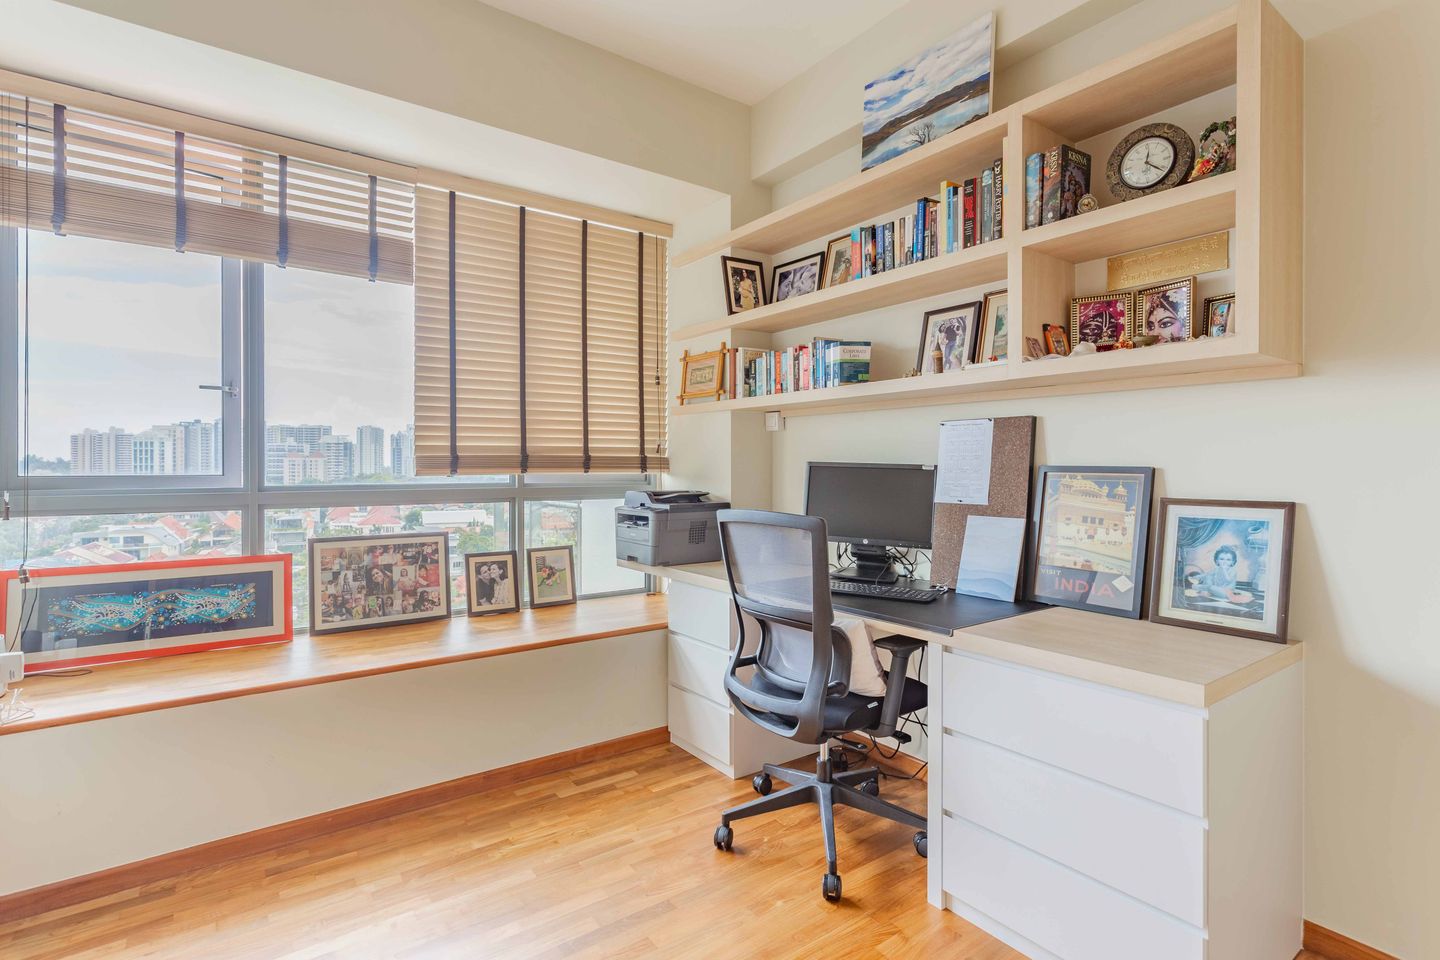 Home Office Design In White And Acacia Tones - Livspace